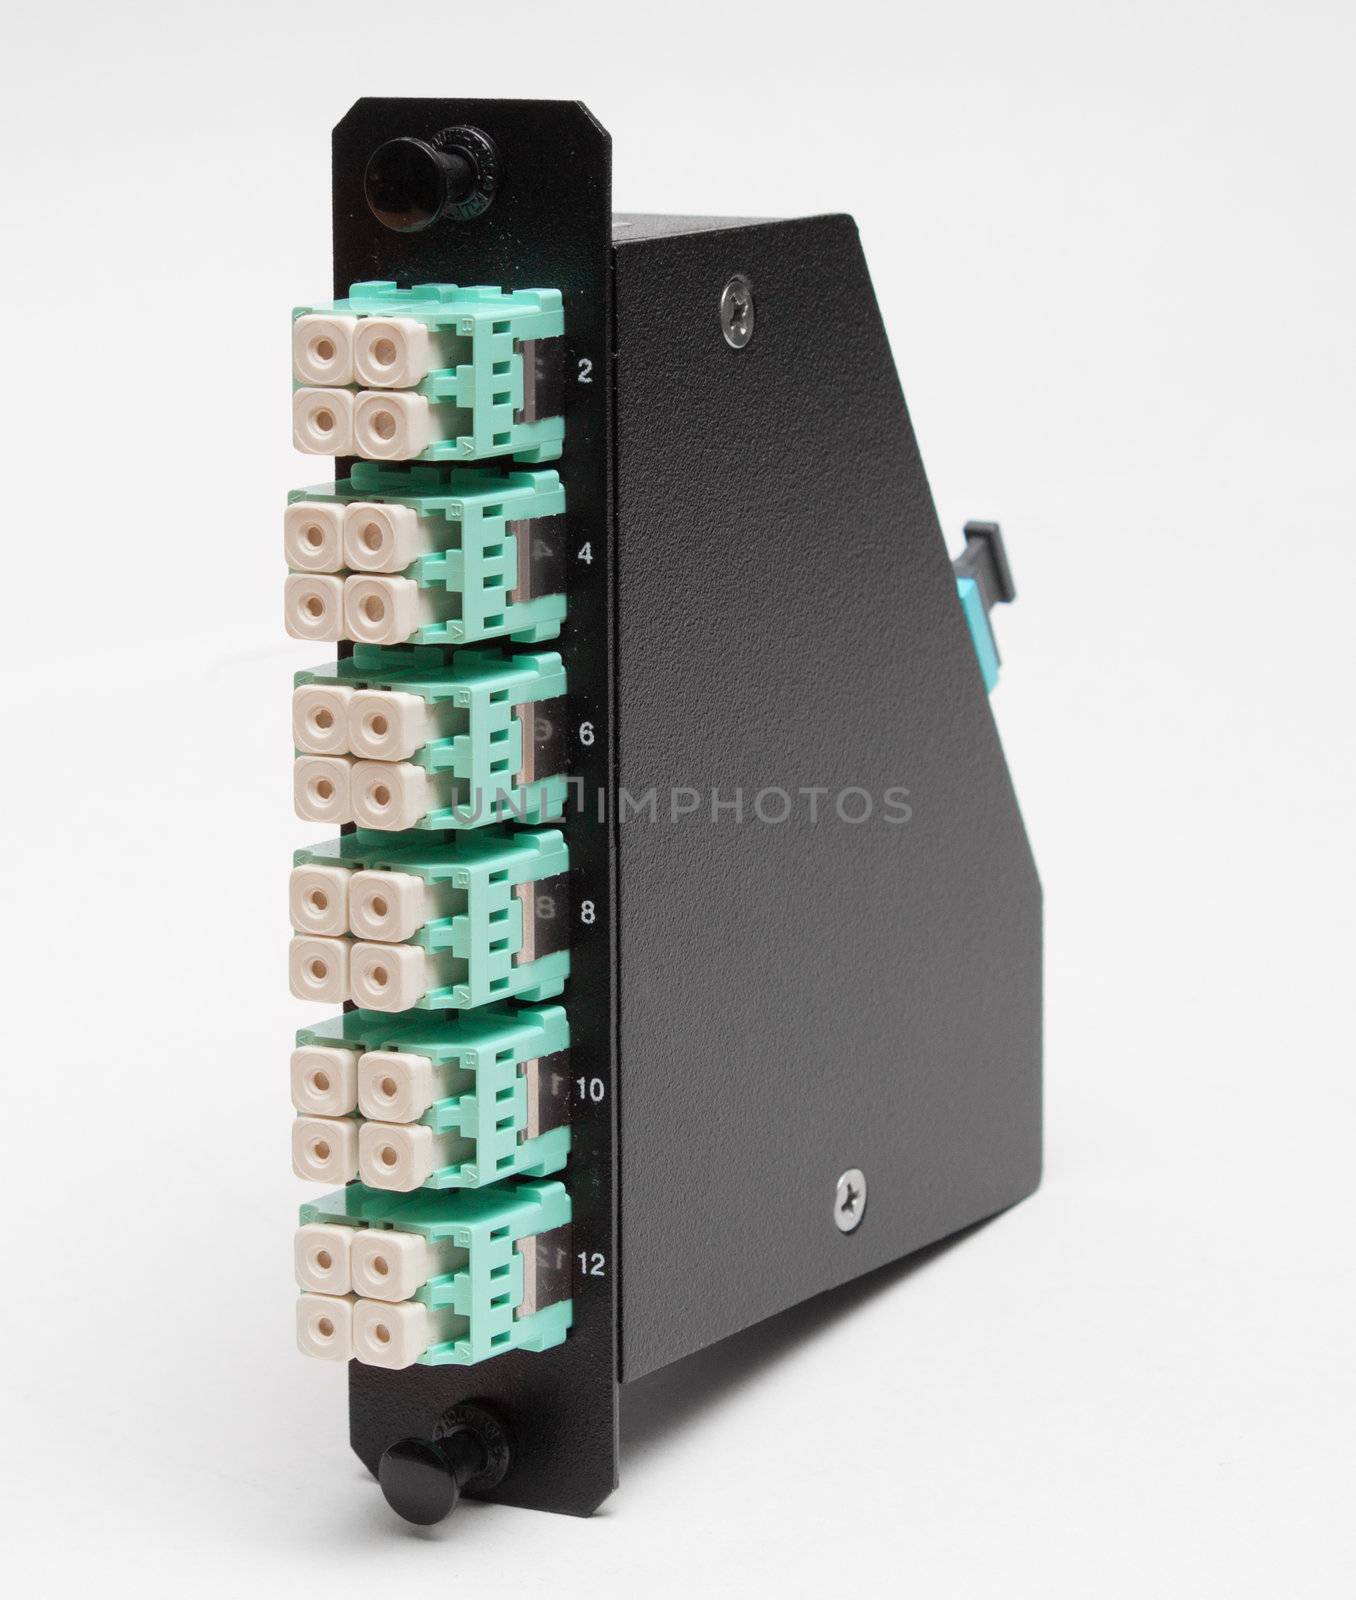 Fiber optic casette with LC connectors by artush